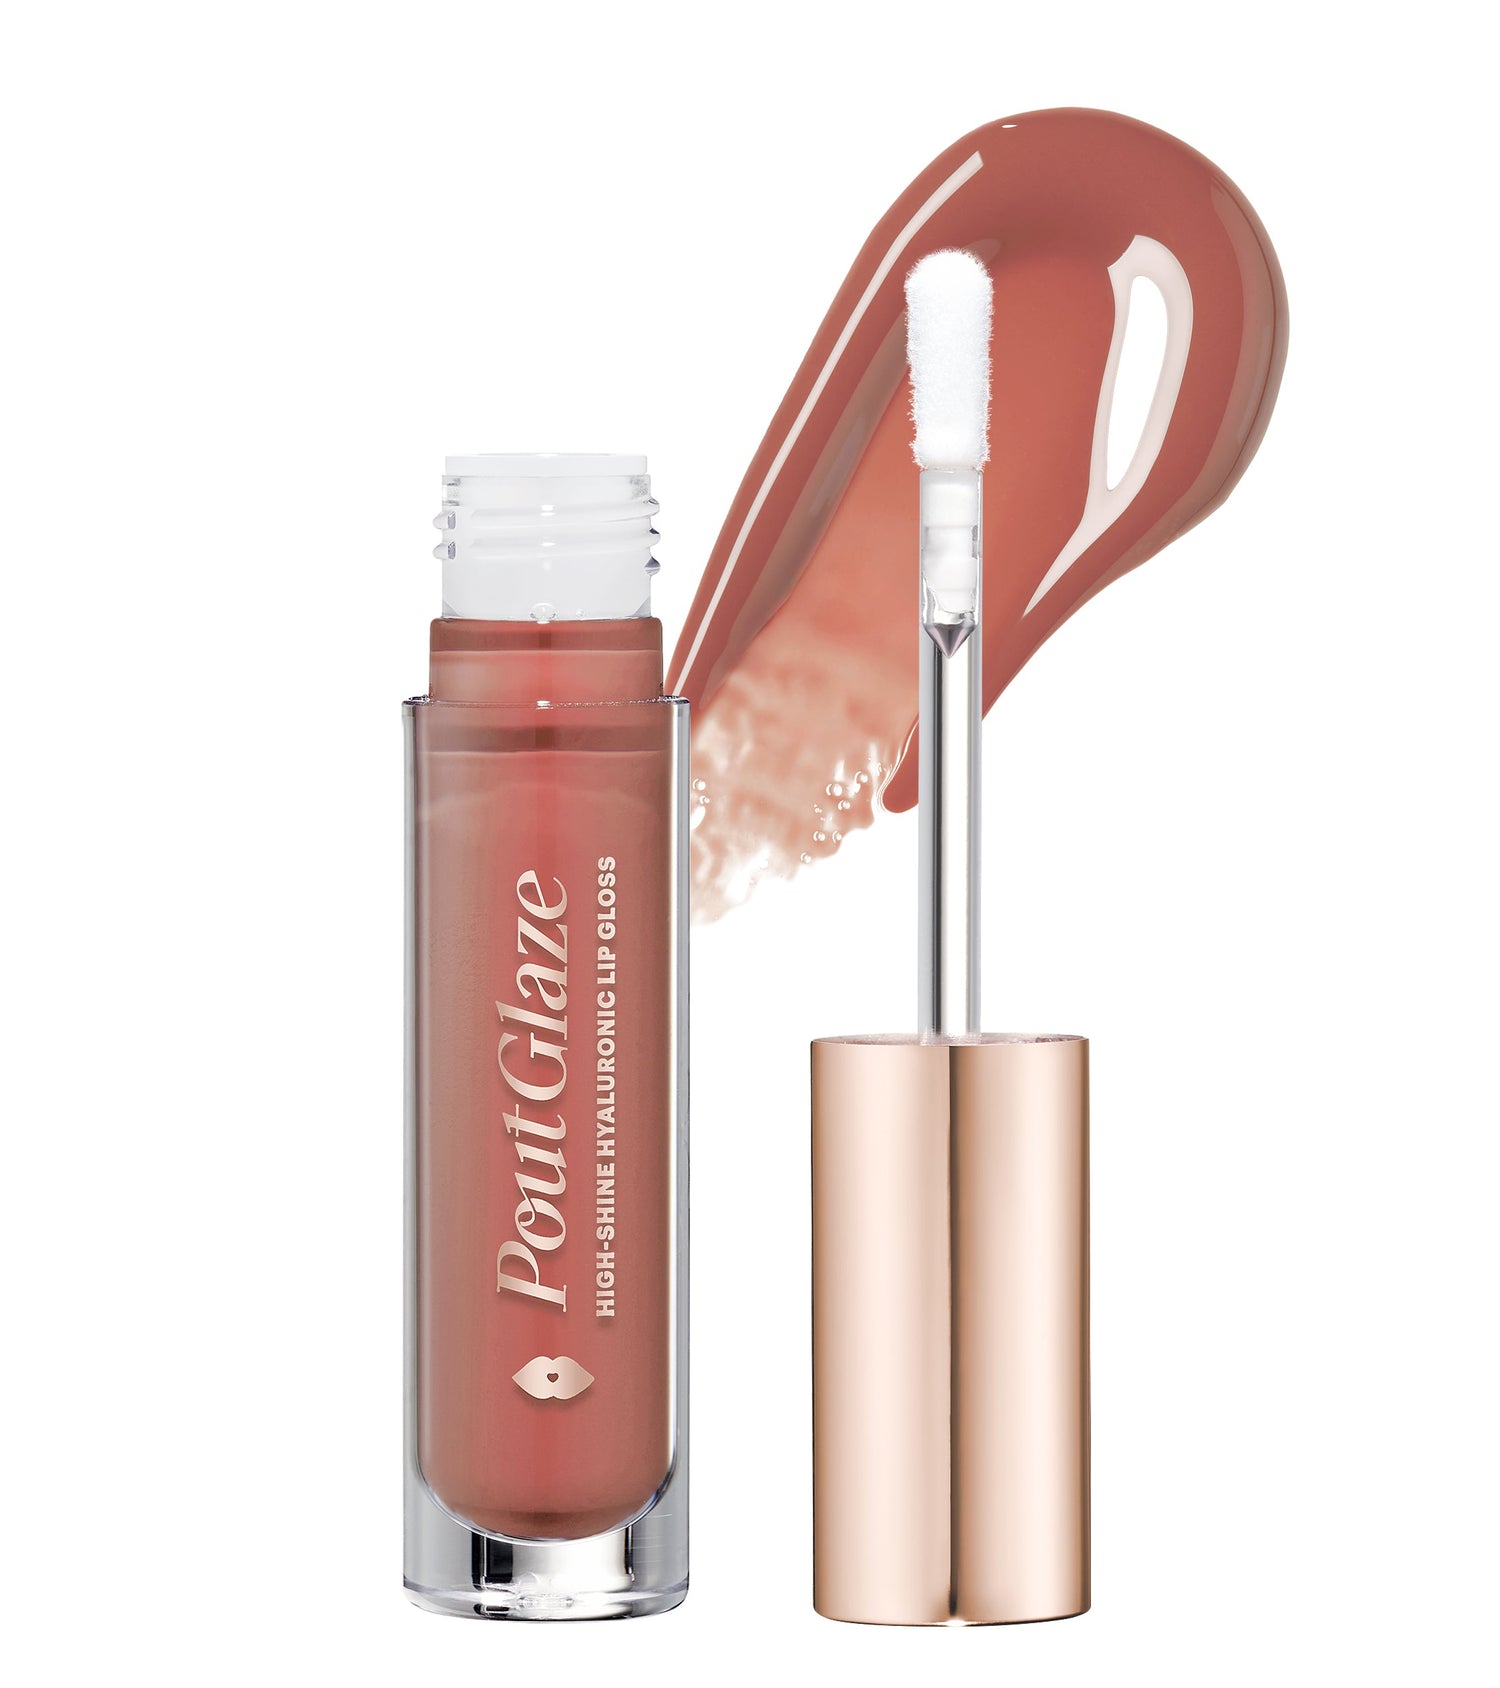 Pout Glaze High-Shine Hyaluronic Lip Gloss (Ana Sofia) Main Image featured